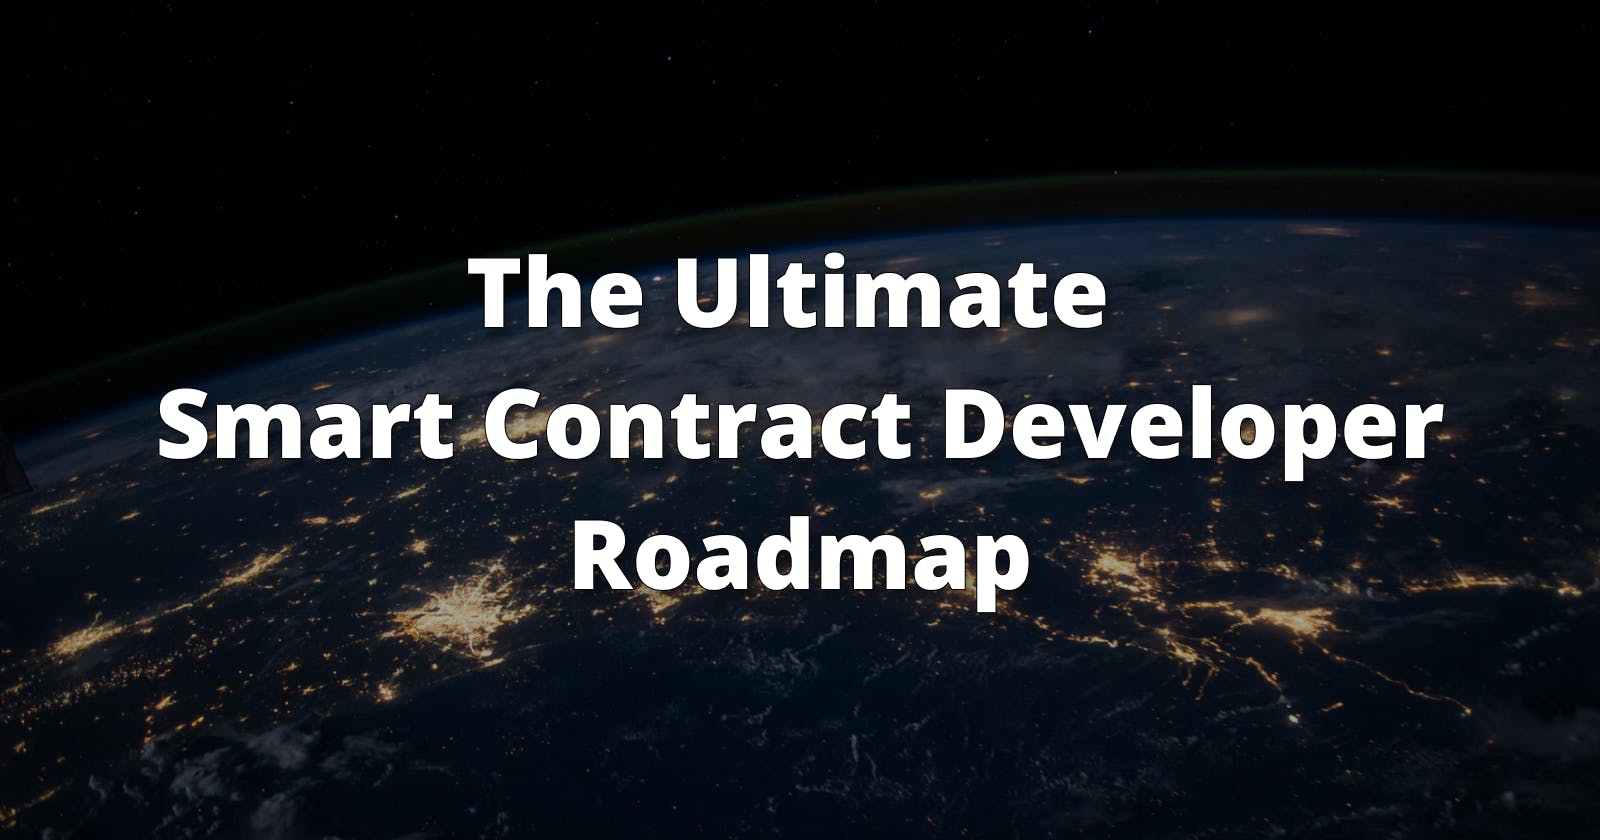 The Ultimate Smart Contract Developer Roadmap